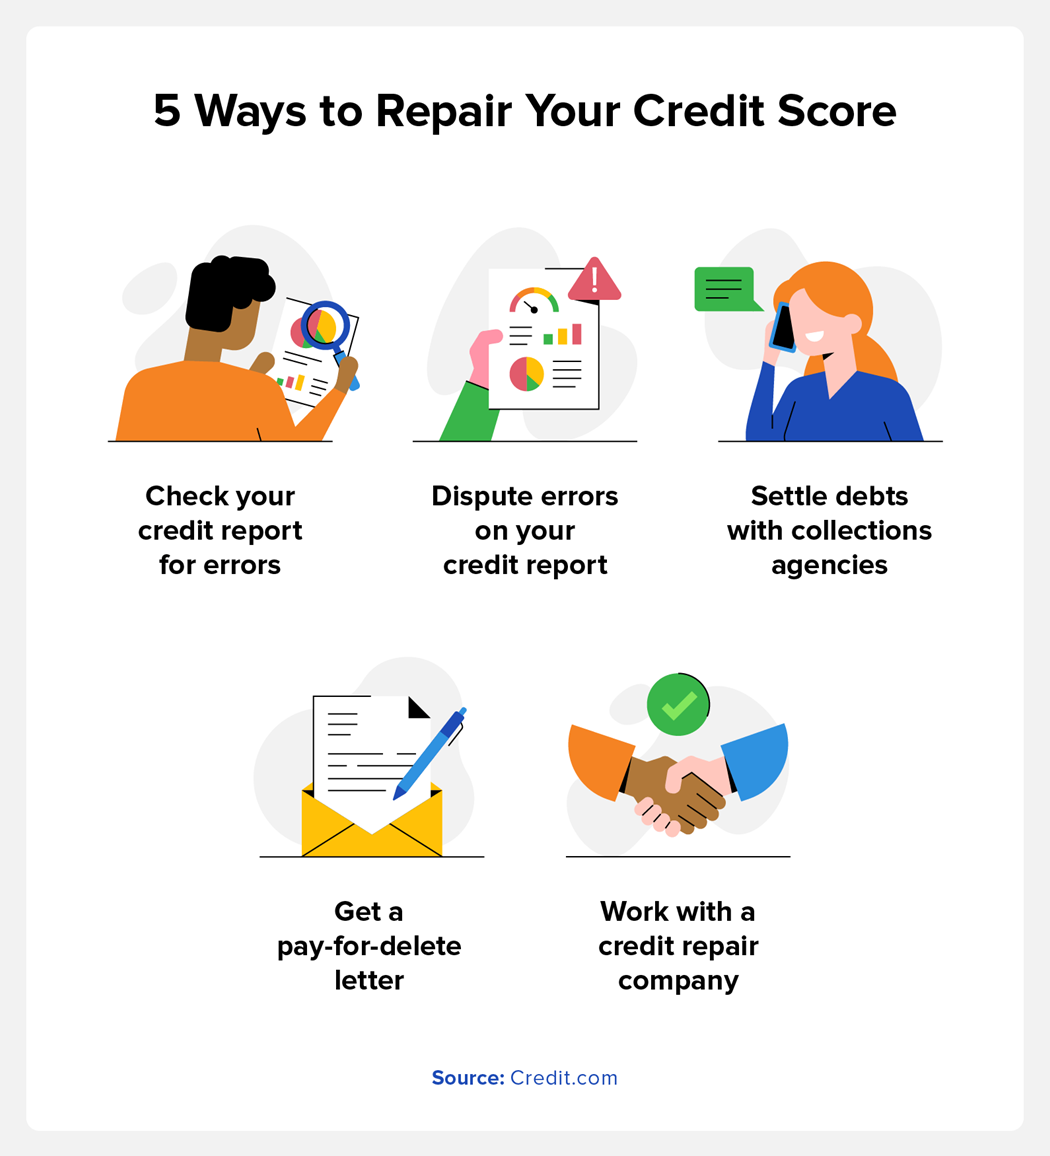 Credit score improvement tips